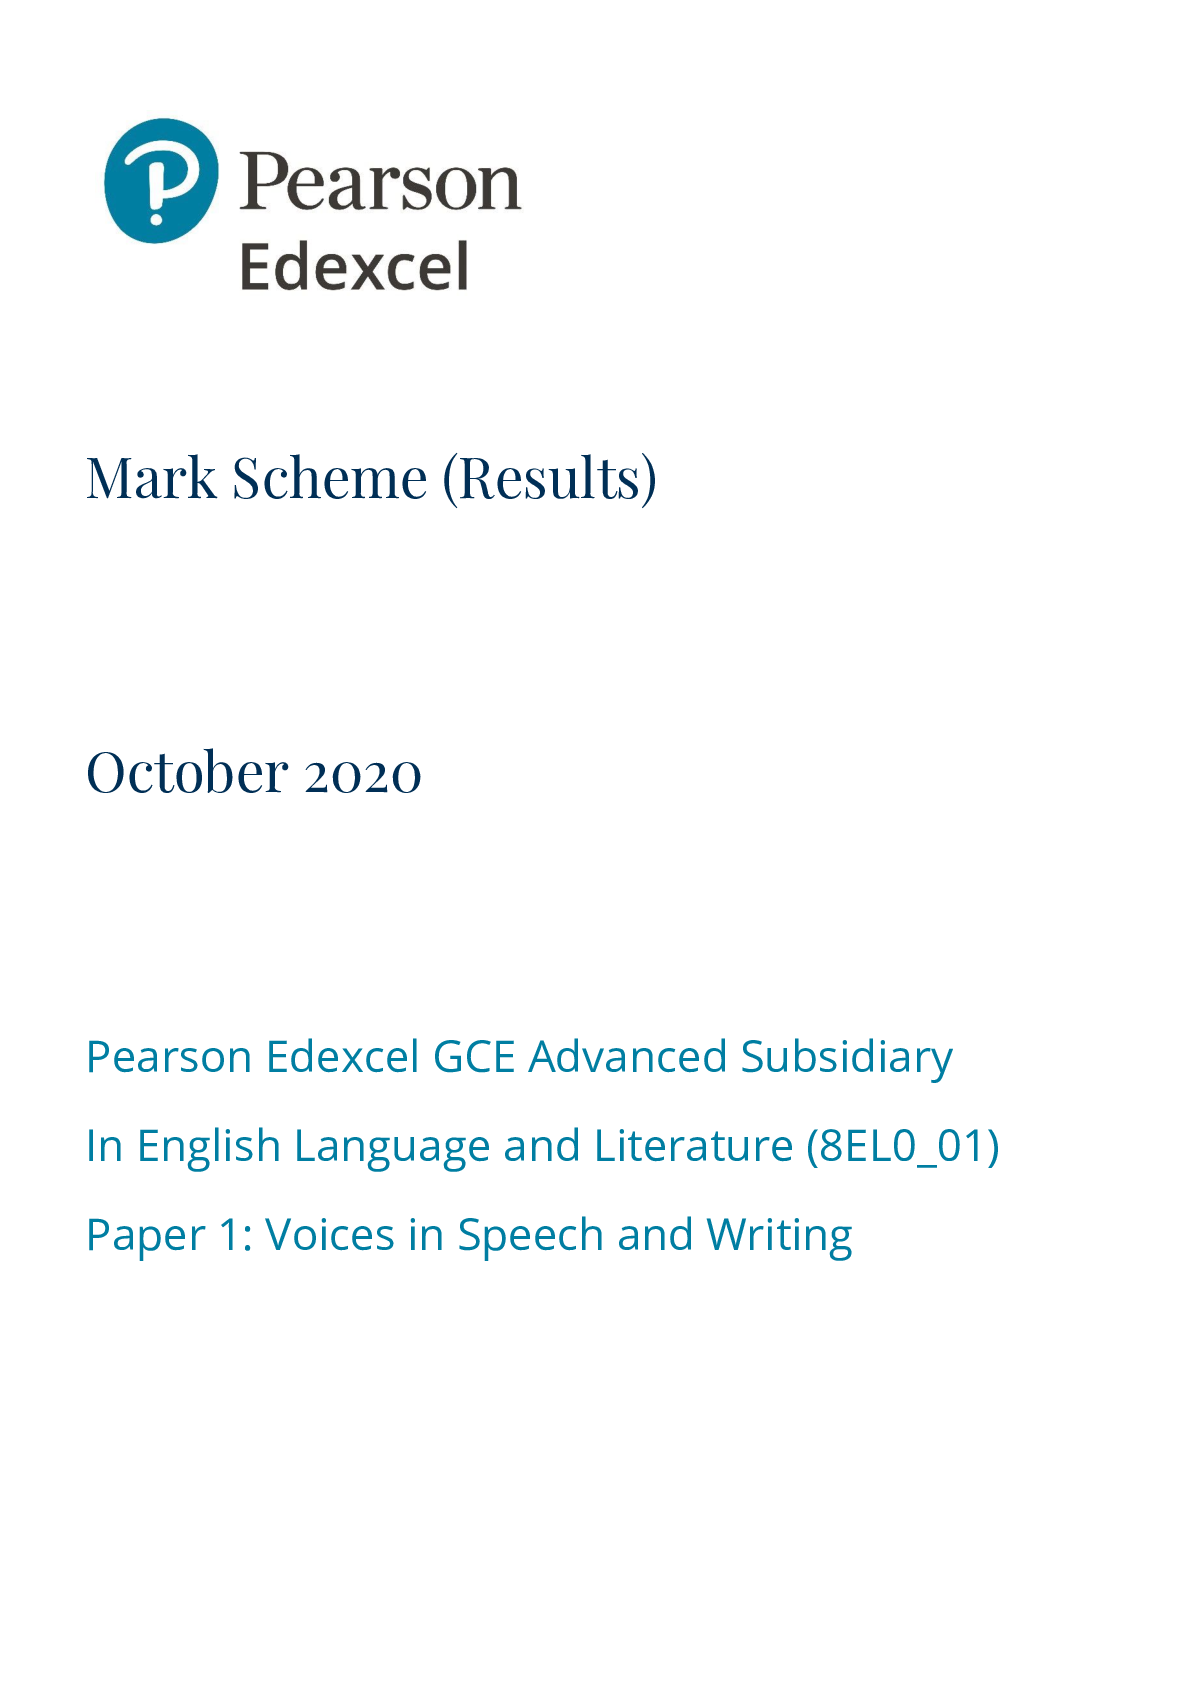 pearson-edexcel-as-level-english-language-and-literature-8el0-01-mark-scheme-2020-paper-1